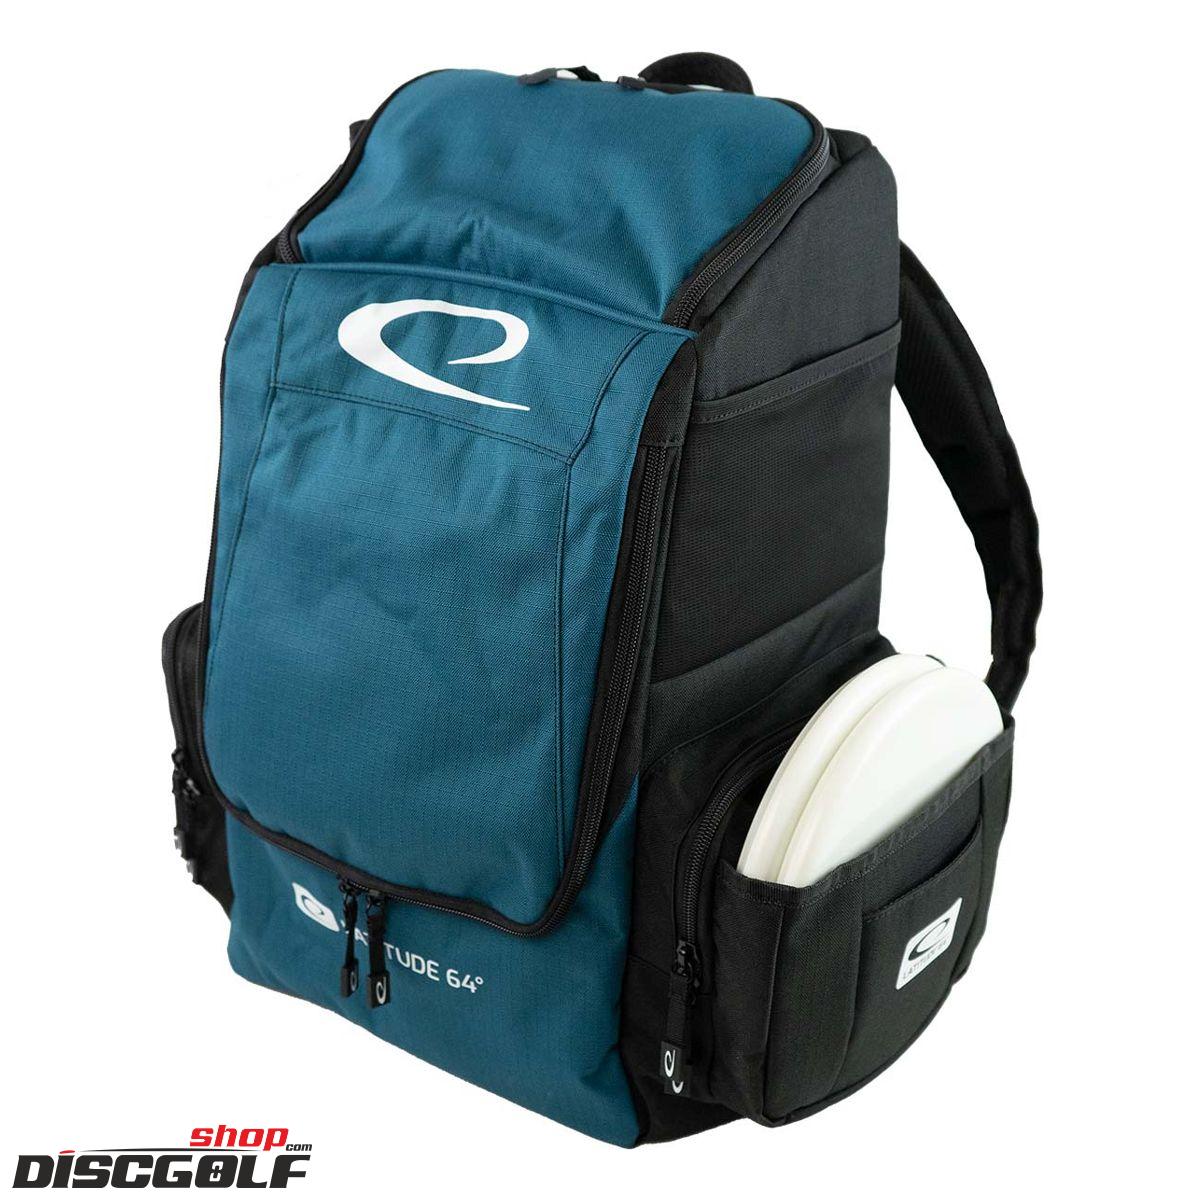 Latitude 64º Core Pro E2 Backpack - Černo-modrá/Black-Flyway-blue (discgolf)